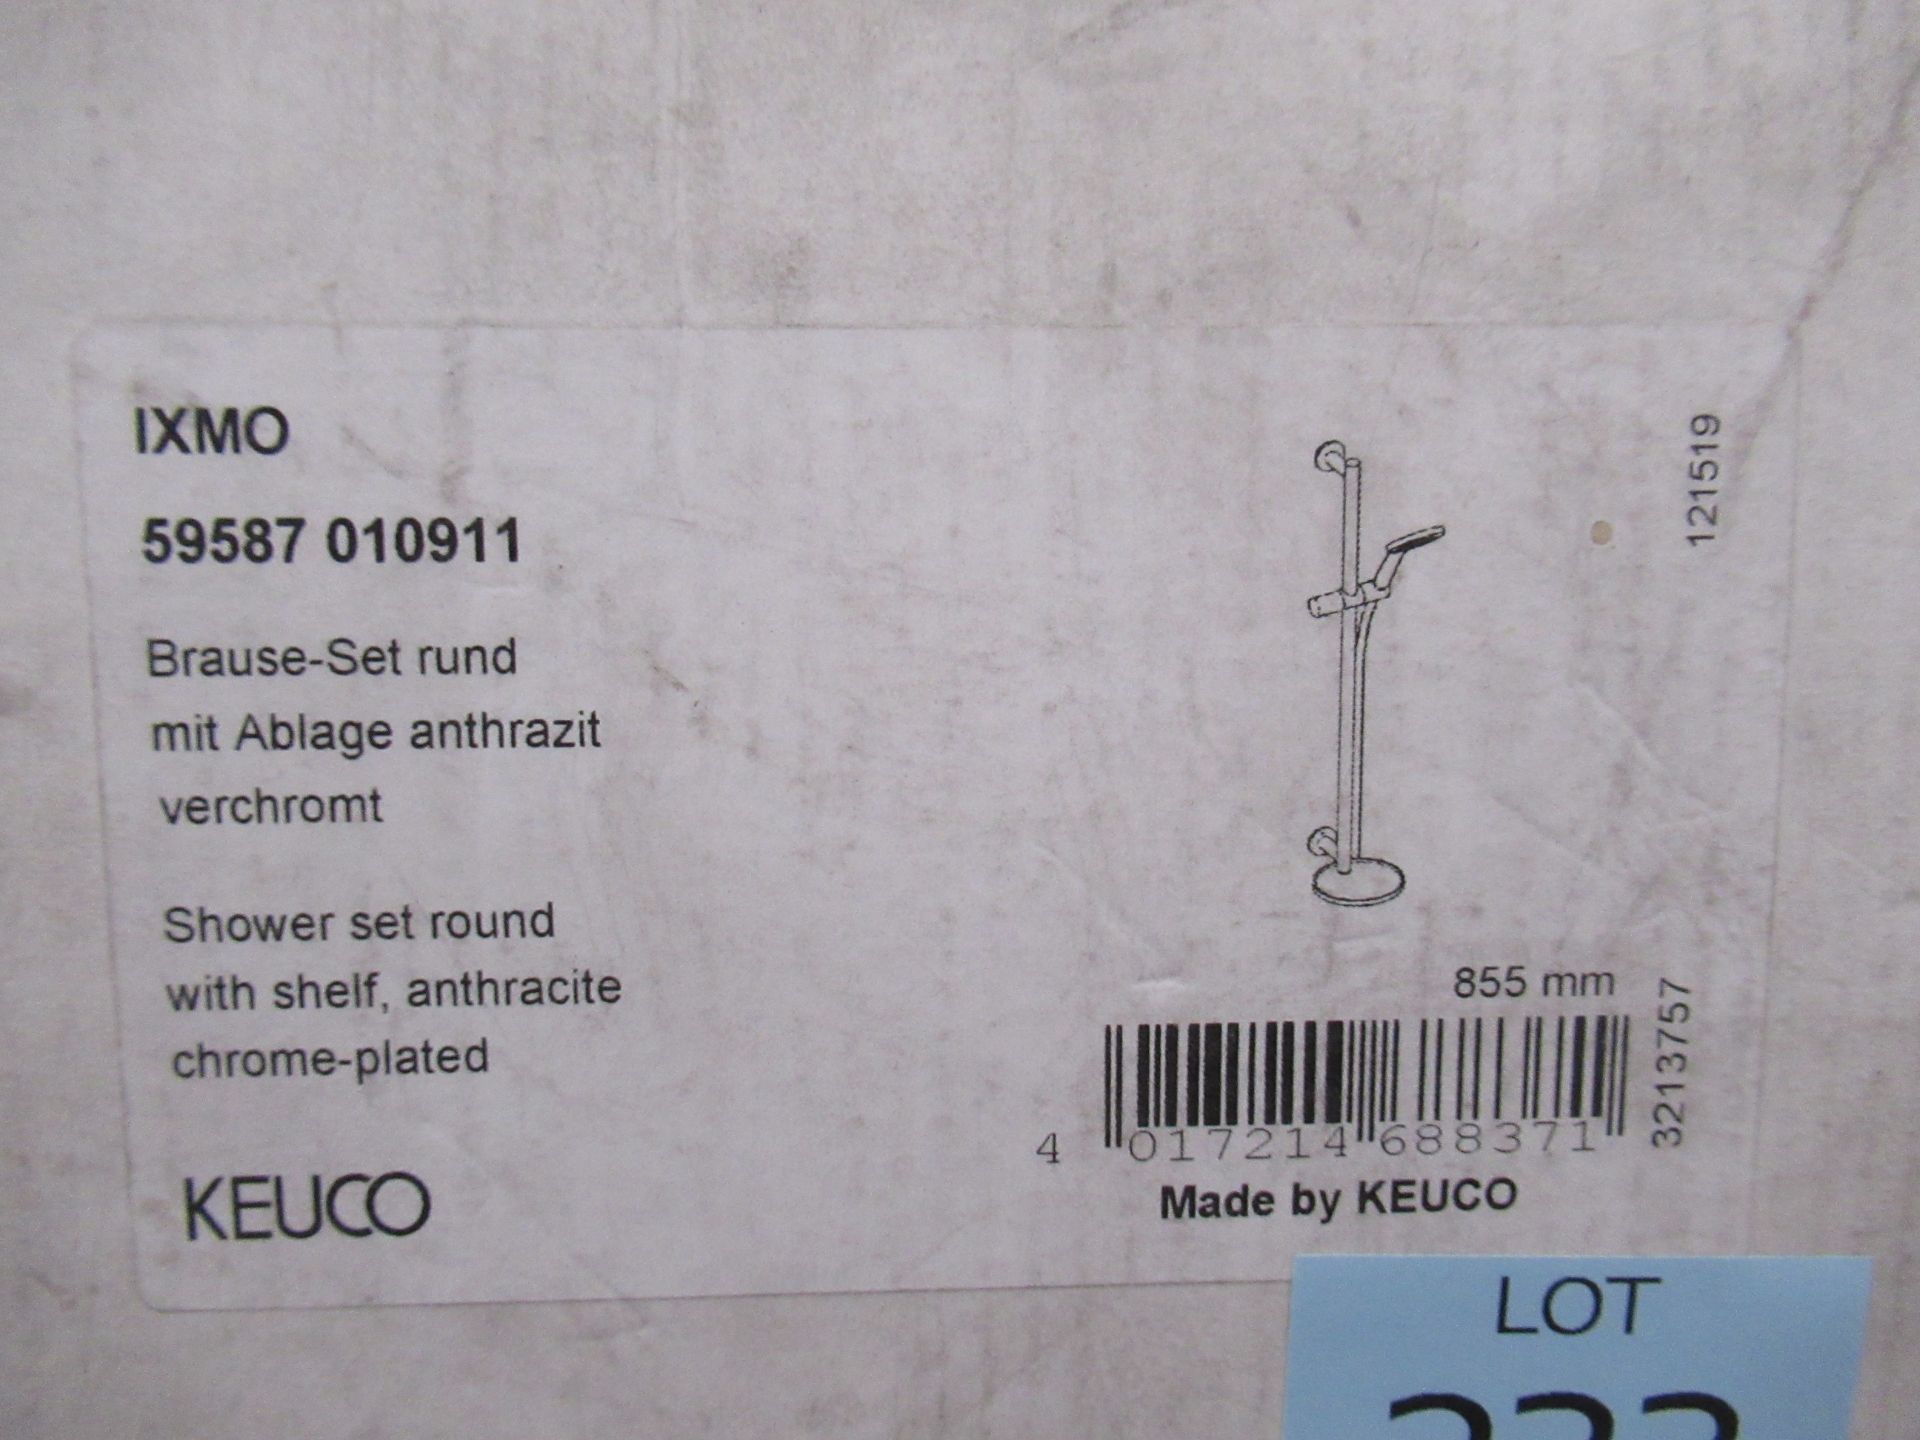 A Keuco IXMO Shower Set Round Chrome Plated, P/N 59587-010911 - Image 2 of 2